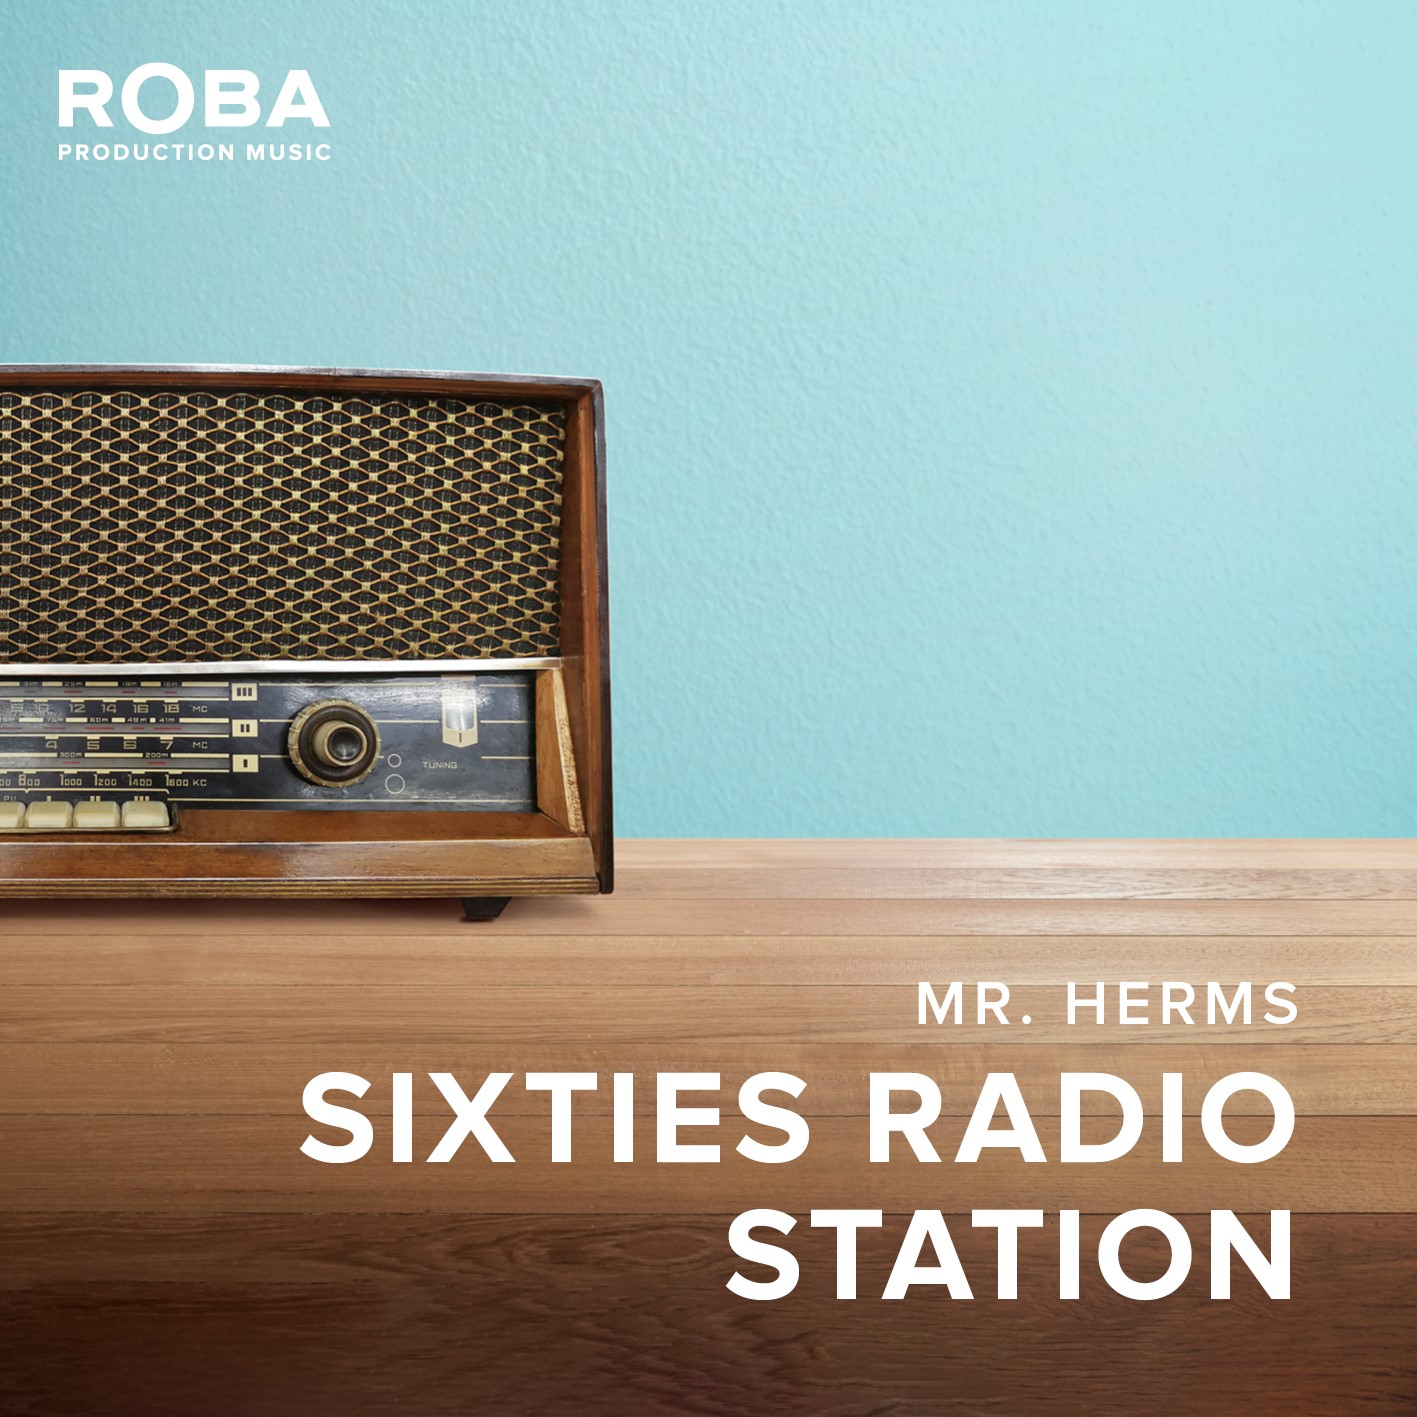 Sixties Radio Station